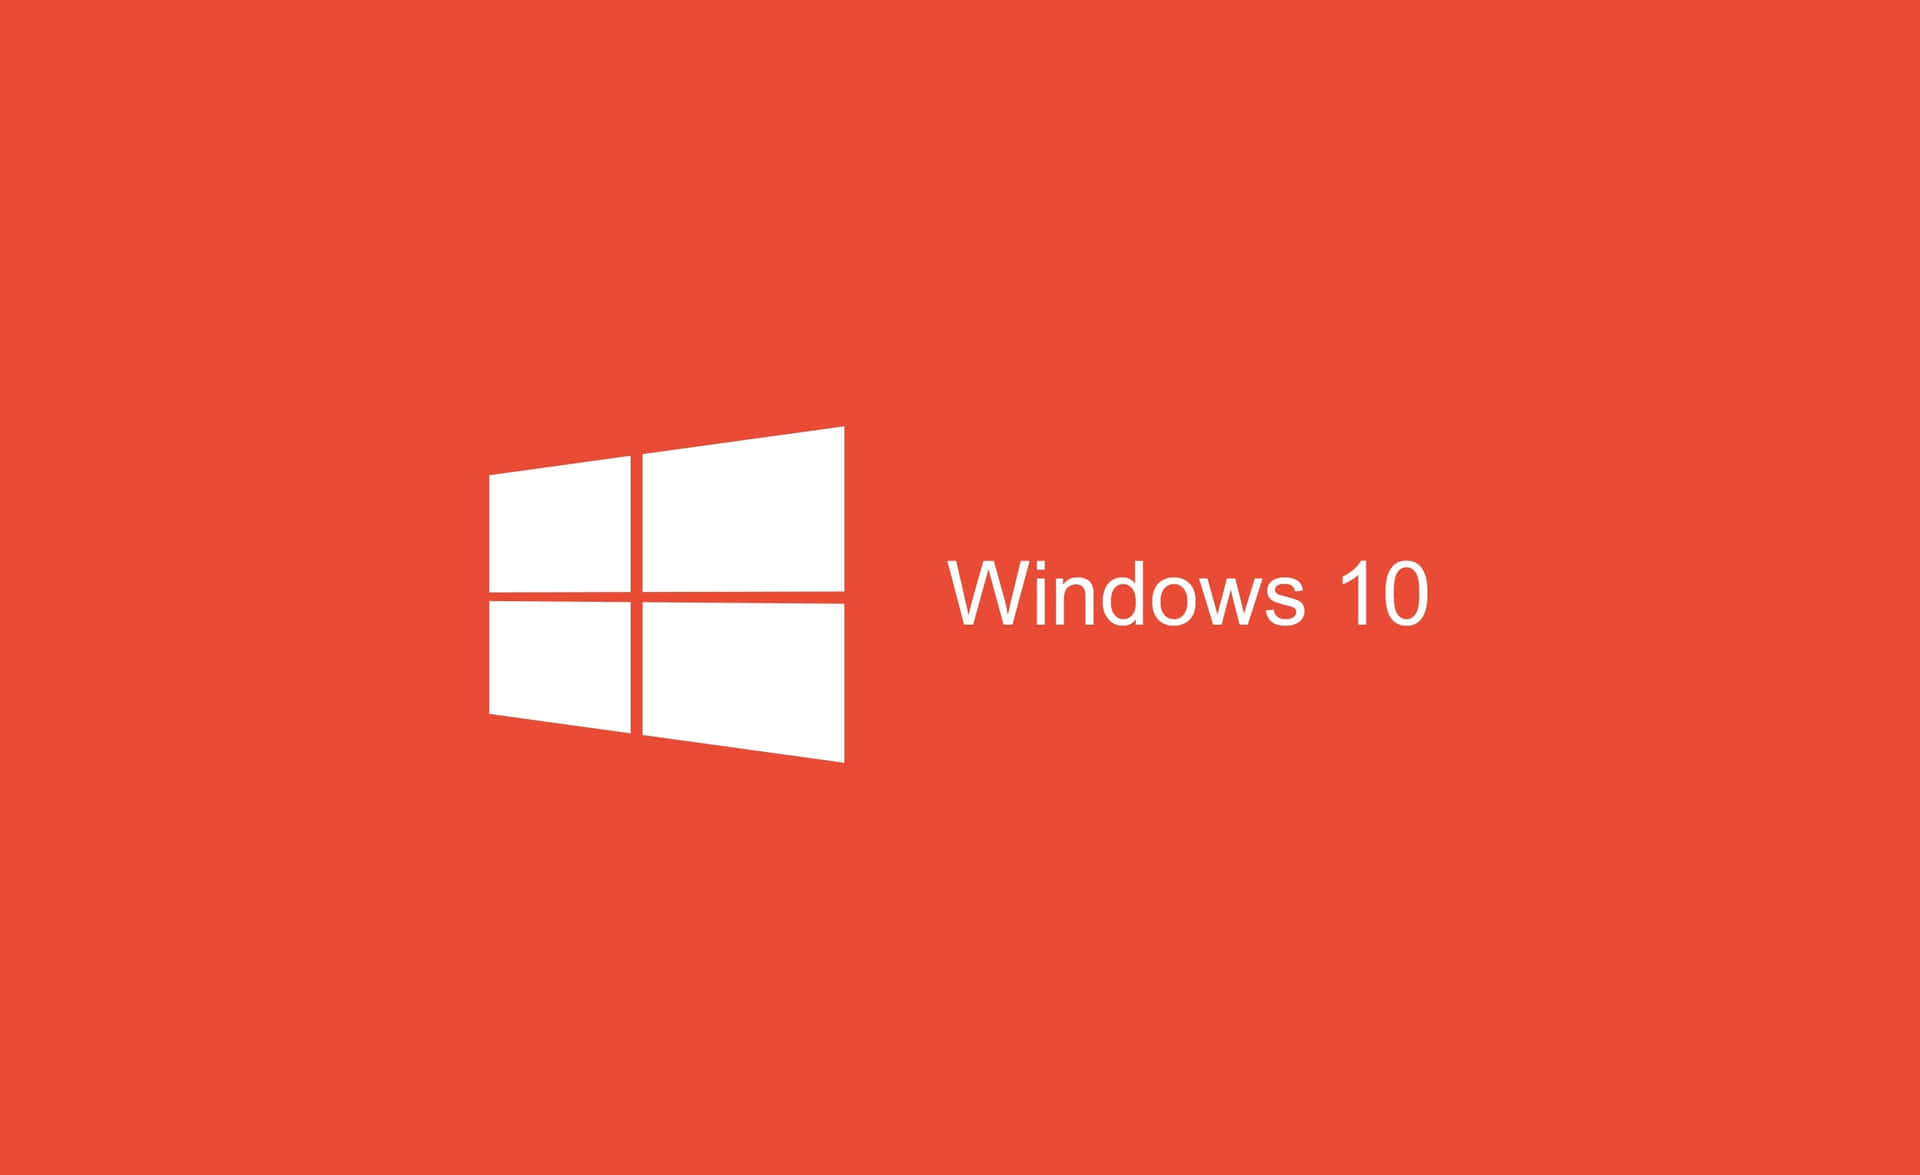 A Windows 10 Desktop for the Modern User